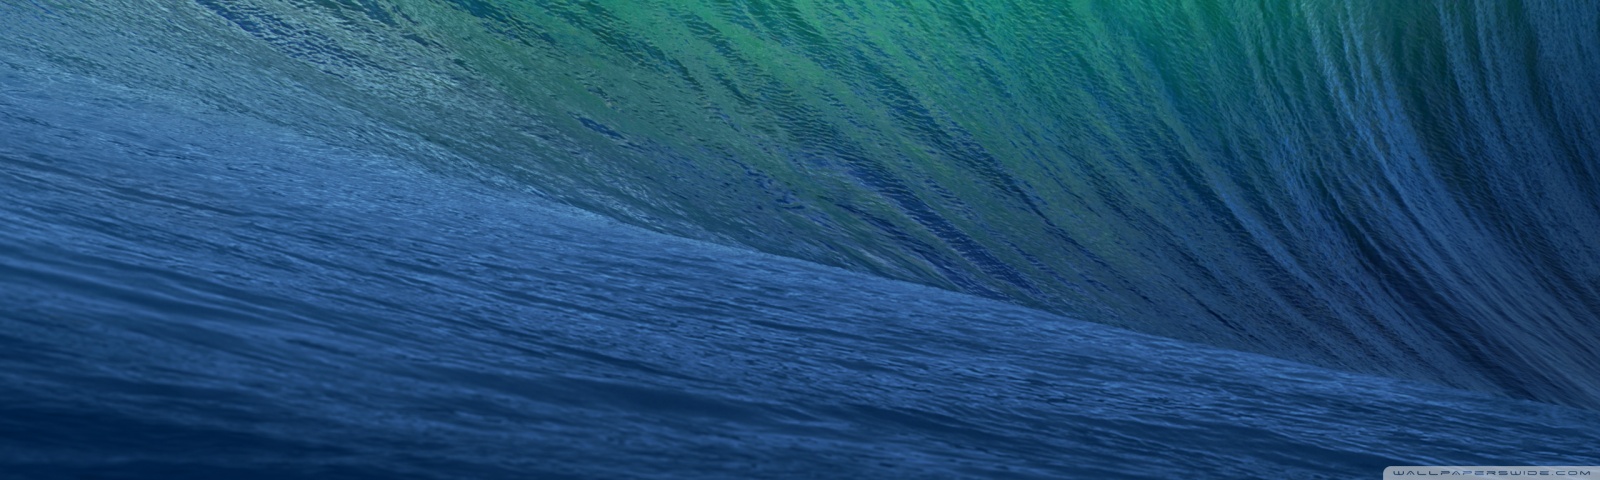 Apple Mac Os X Mavericks Wallpaper HD Res